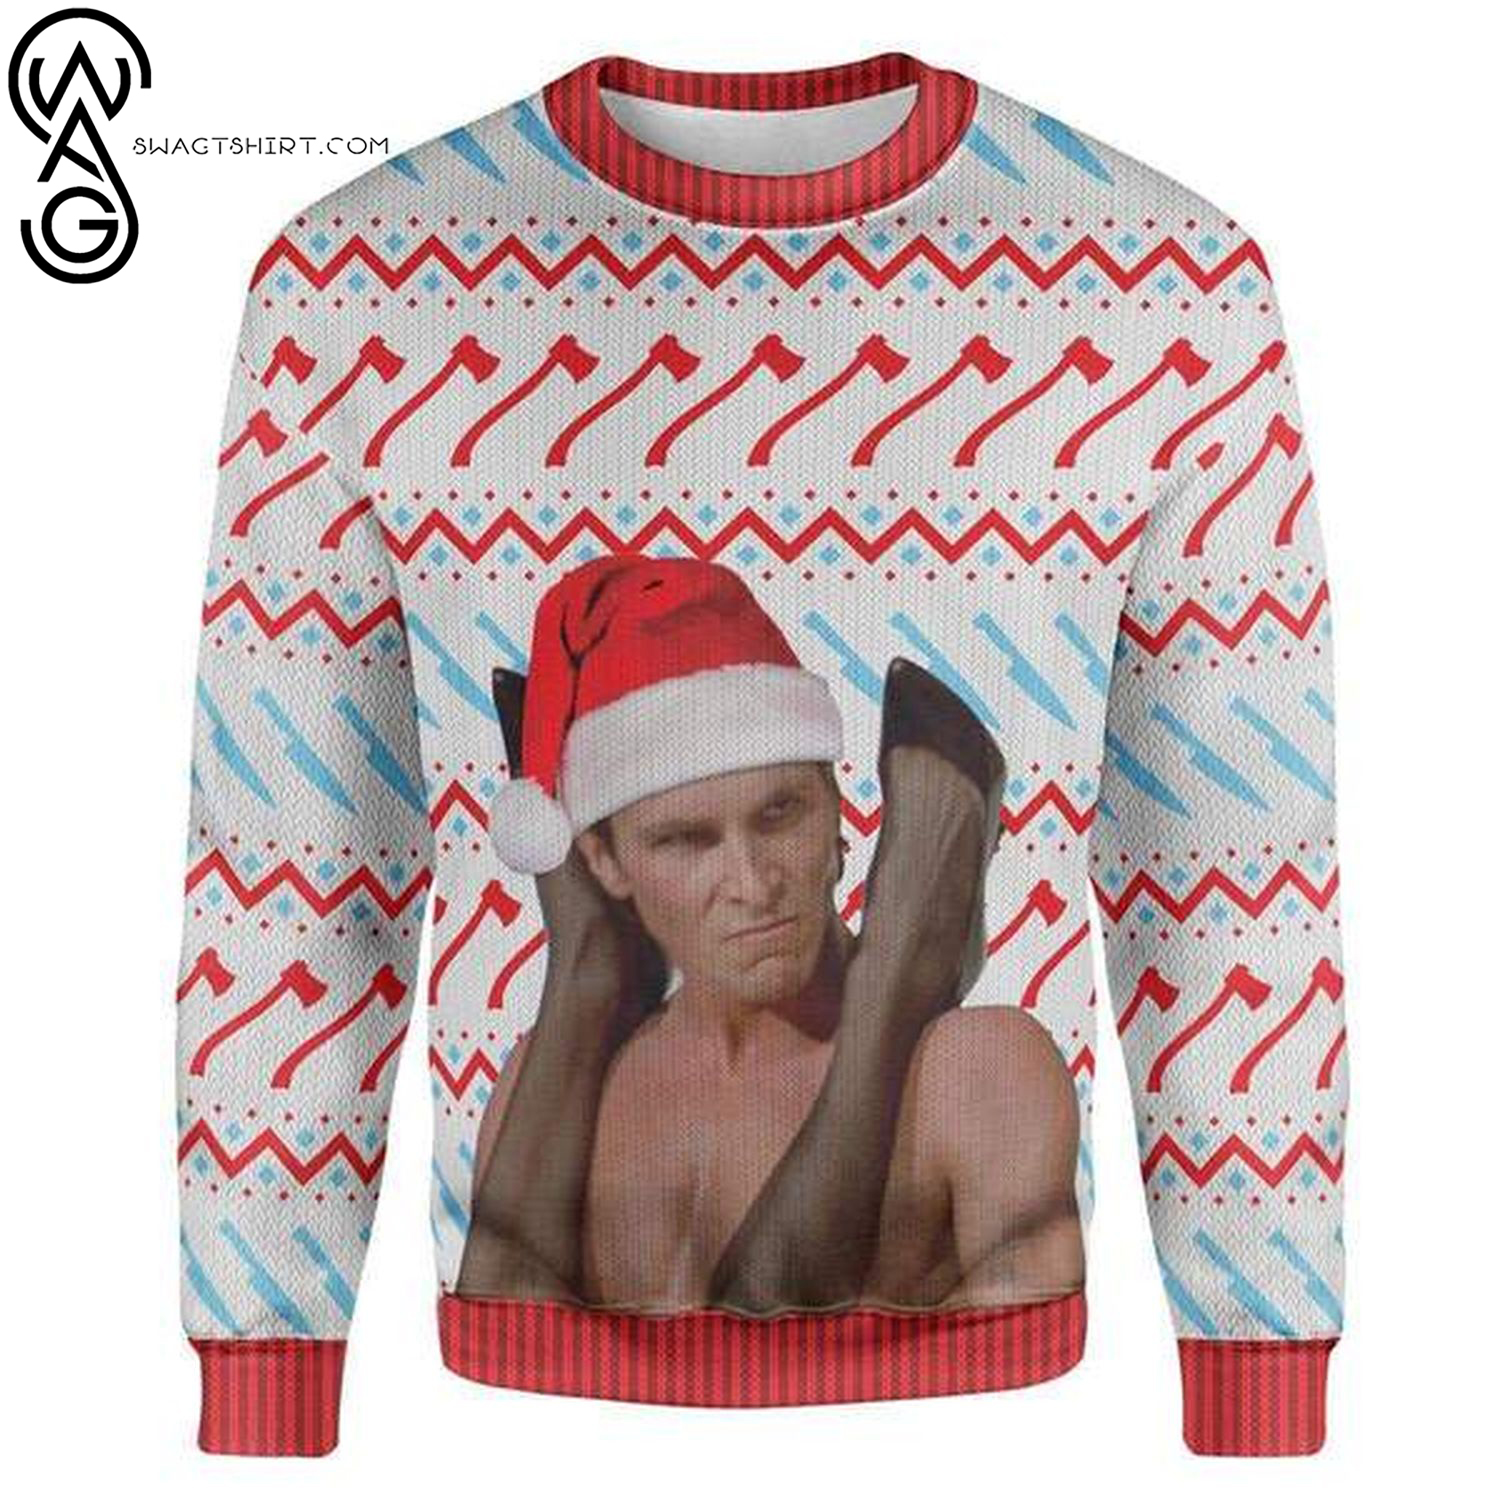 Psycho smash full printing ugly christmas sweater